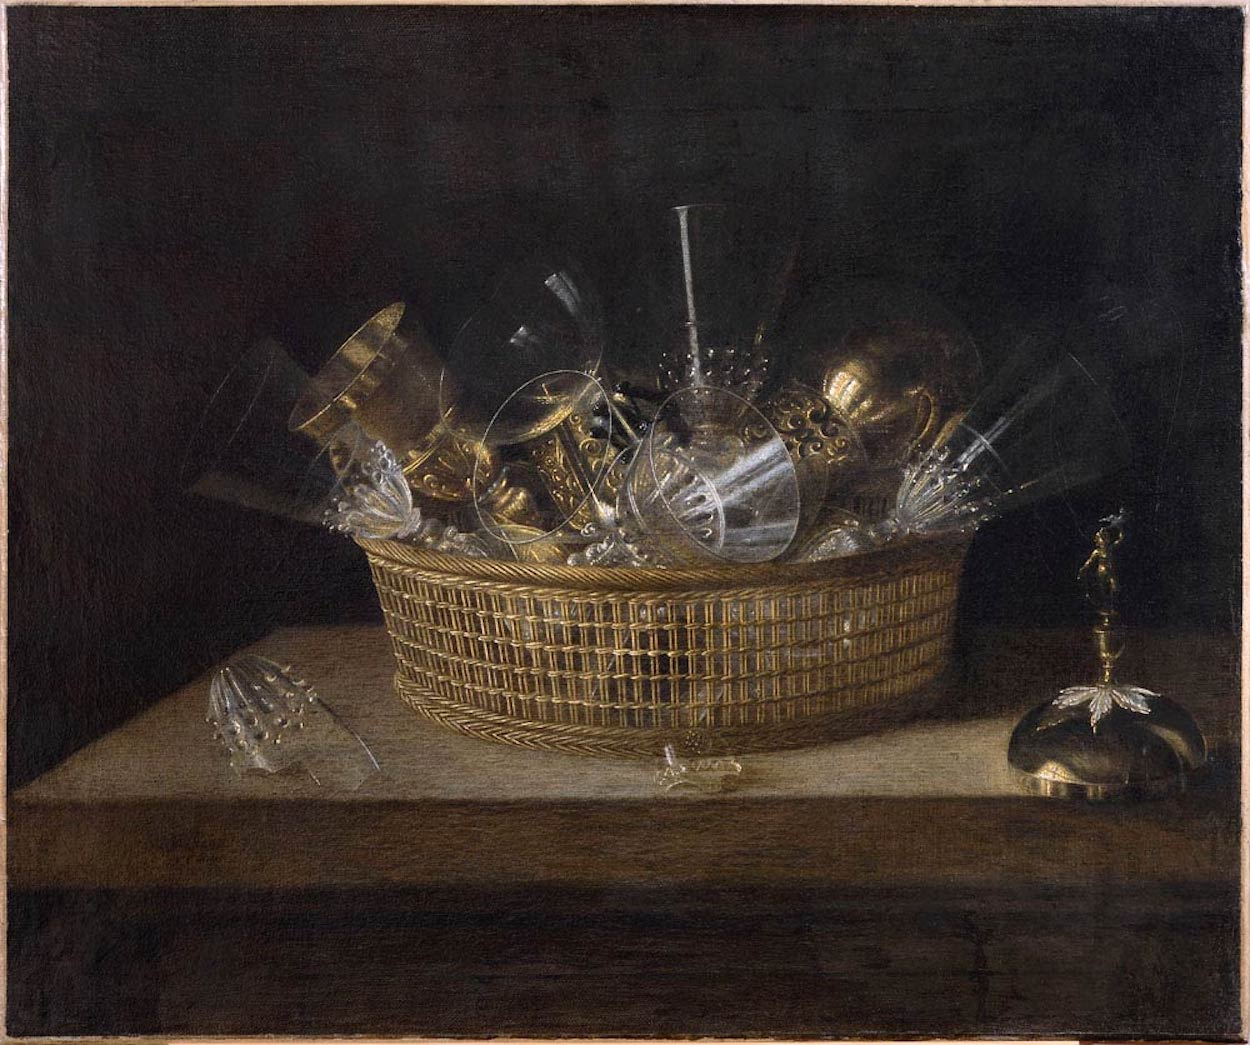 Корзина с бокалами (Basket with Glasses) by Sébastien Stoskopff - 1644 - 52 x 63 см 